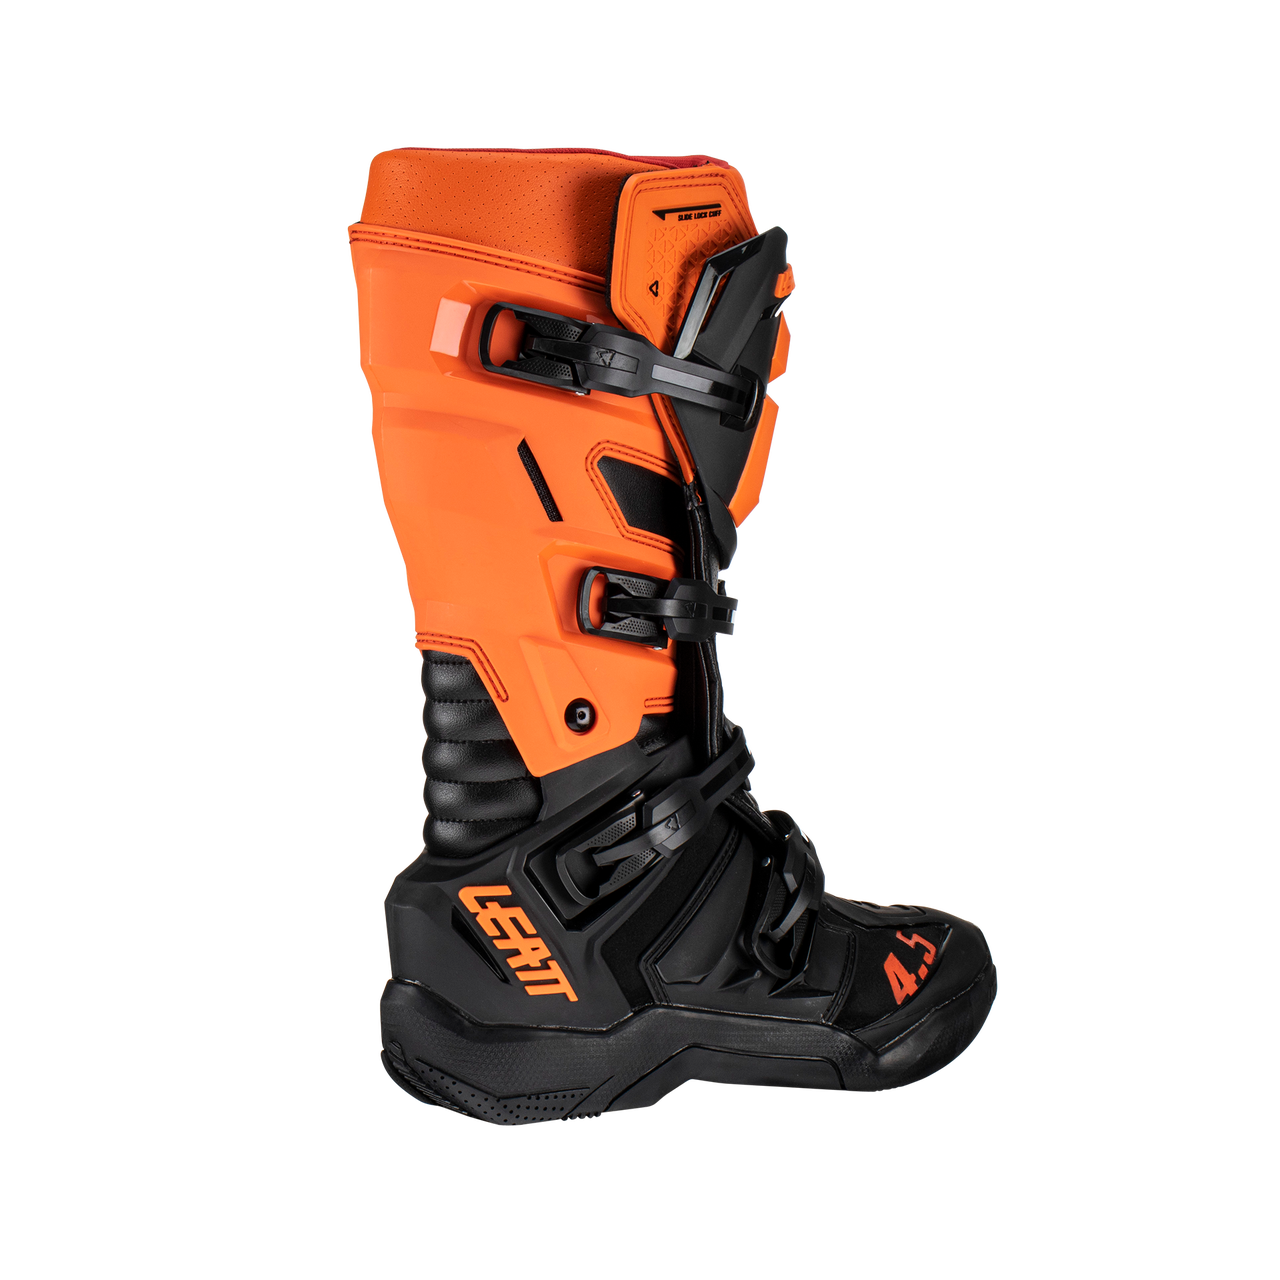 Leatt 4.5 MX Boots Orange